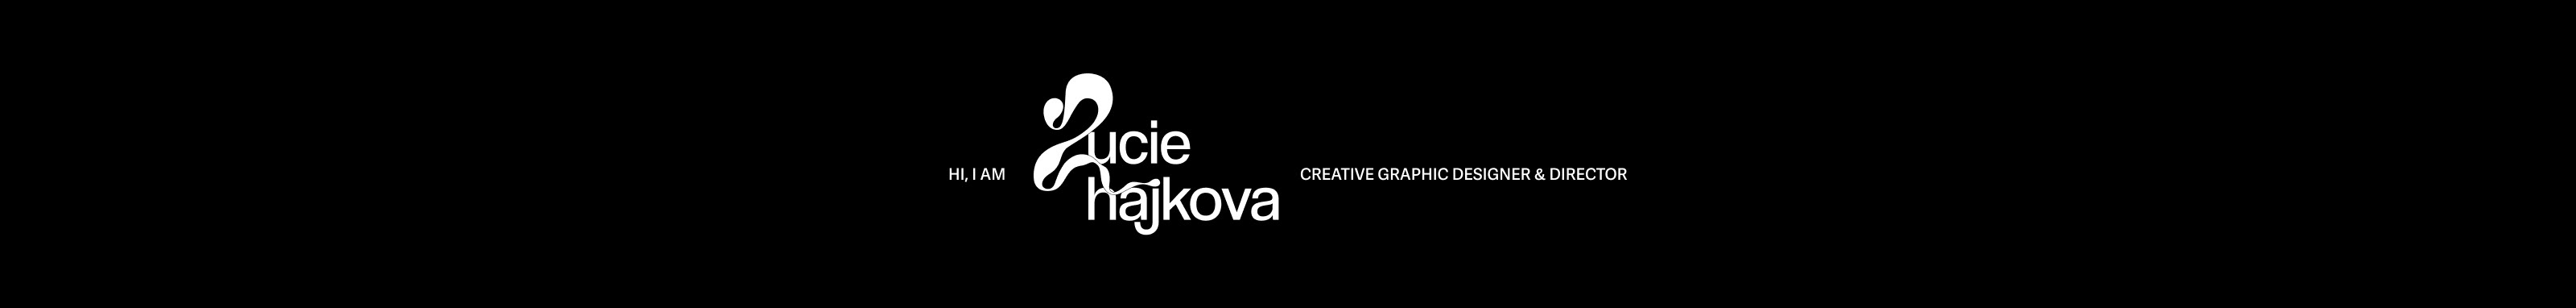 Banner de perfil de Lucie Hajková